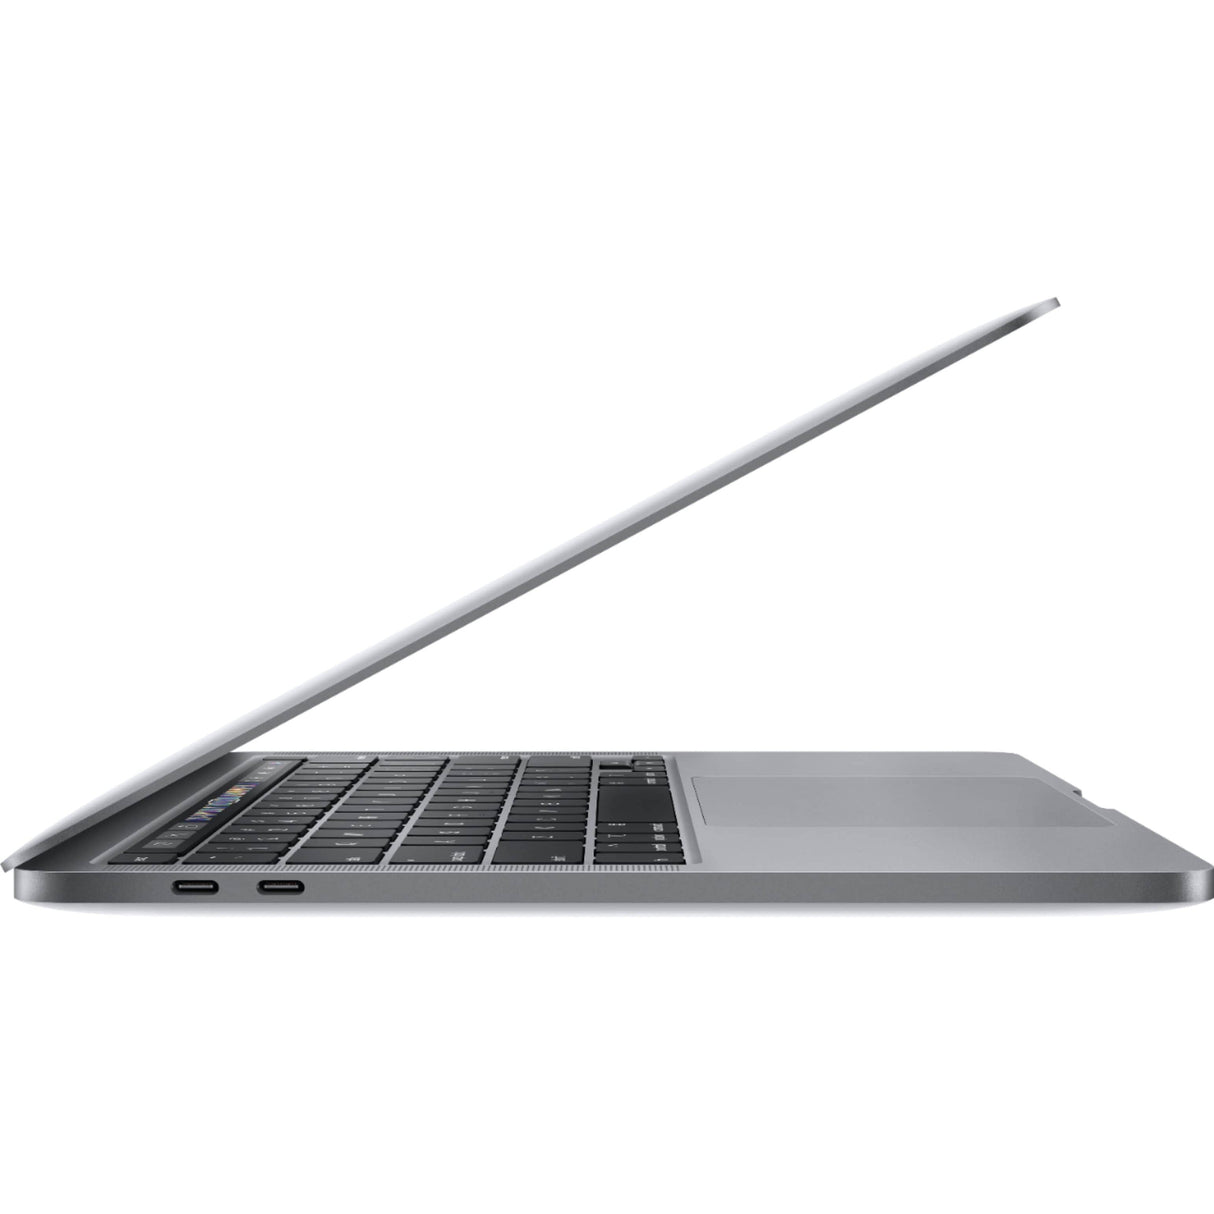 Apple MacBook Pro 13.3" MXK52LL/A (2020) Laptop, Intel Core i5, 8GB RAM, 512GB SSD, Space Grey - Refurbished Excellent